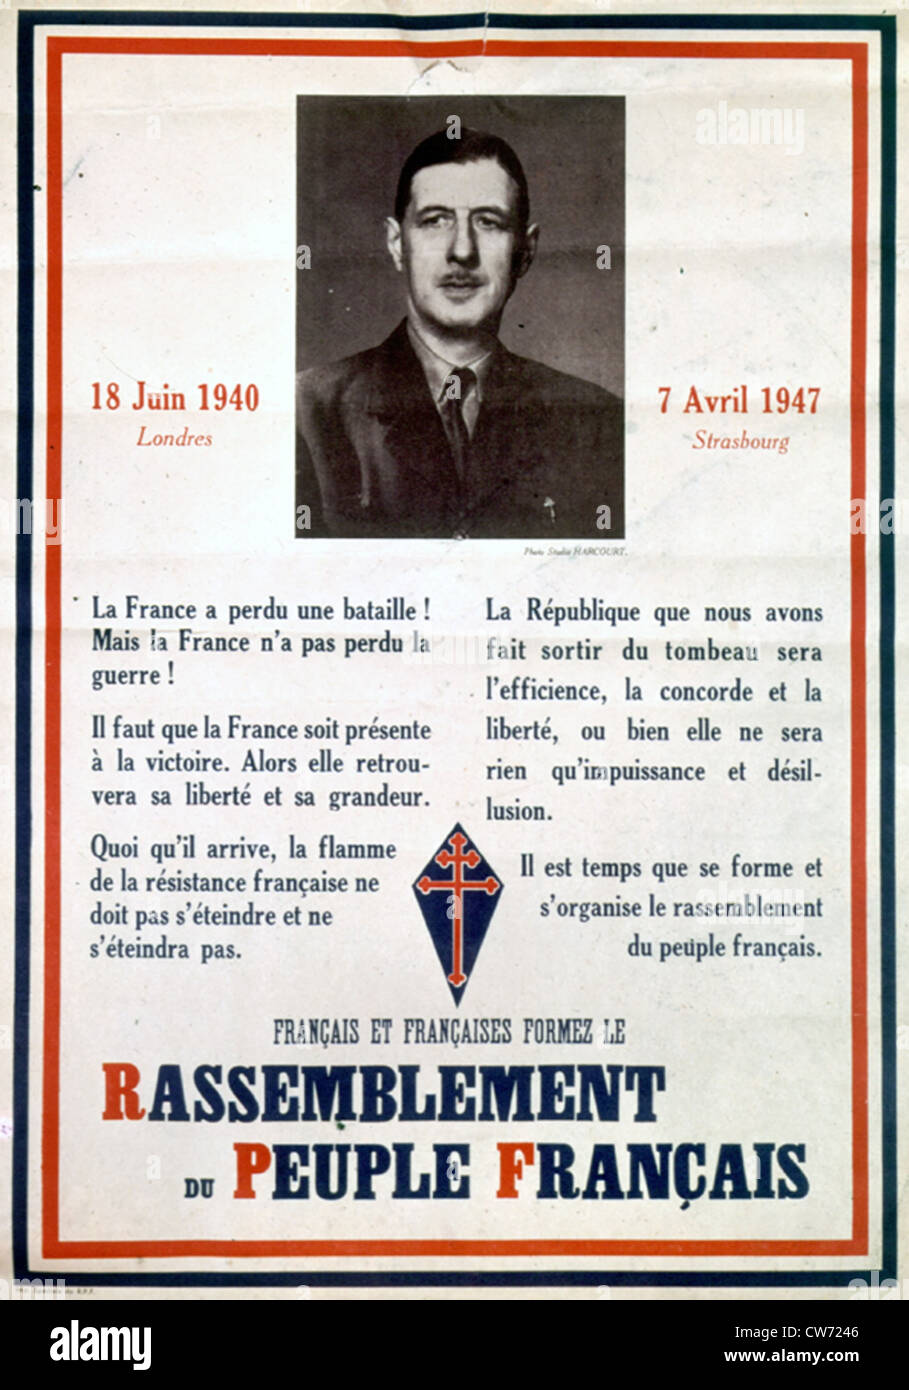 April 7, 1947. Strasbourg speech. RPF (Rassemblement du Peuple Français). Stock Photo